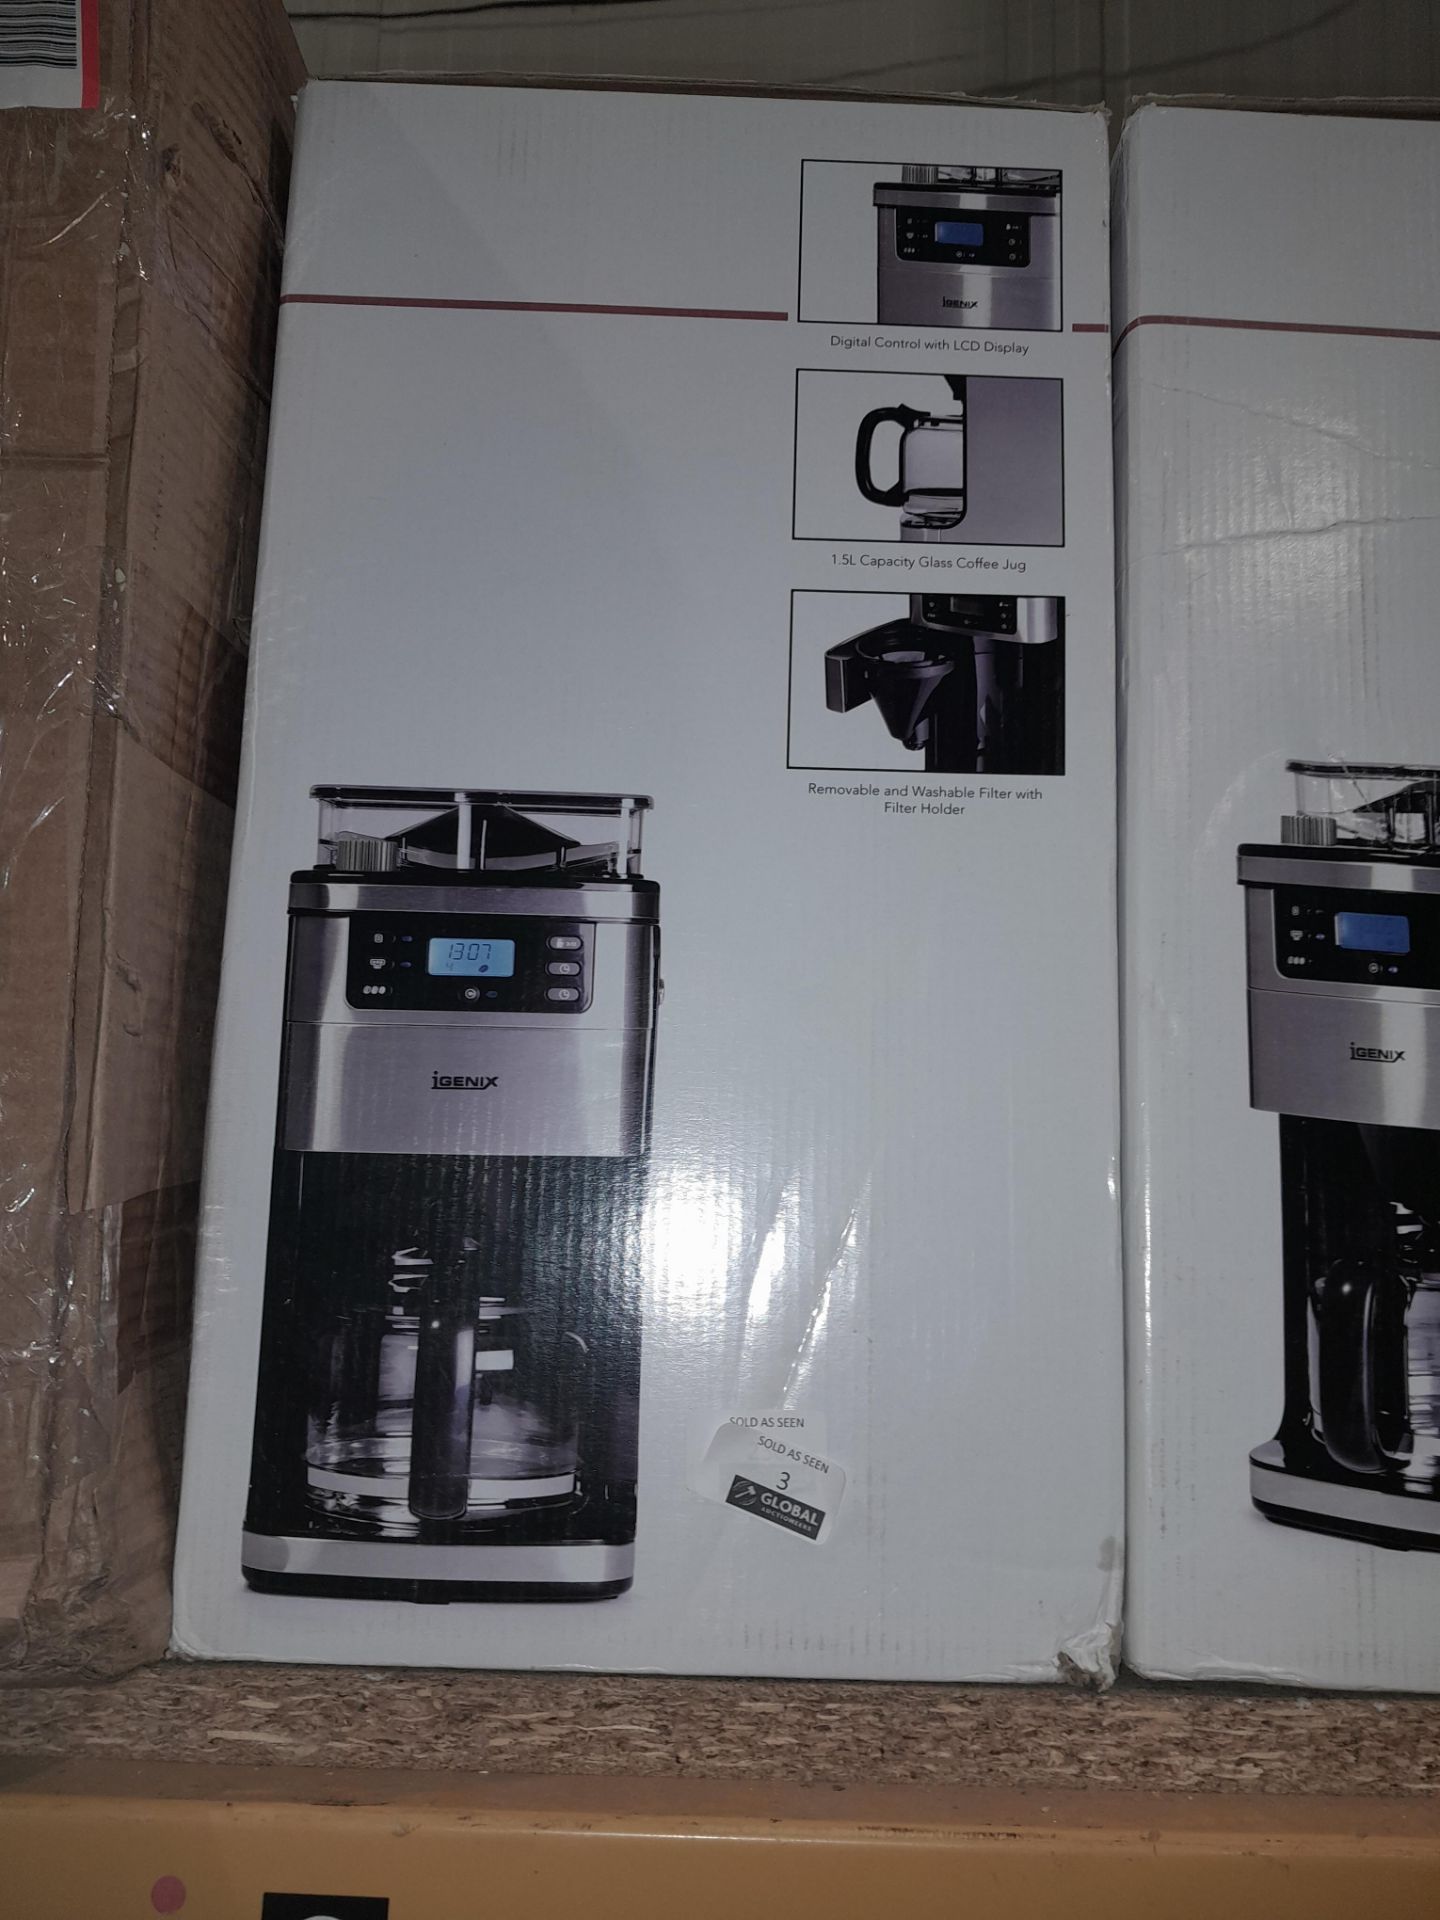 RRP £150 Brand New Igenix Digital Coffee Machine, Ig8225 - Image 2 of 2